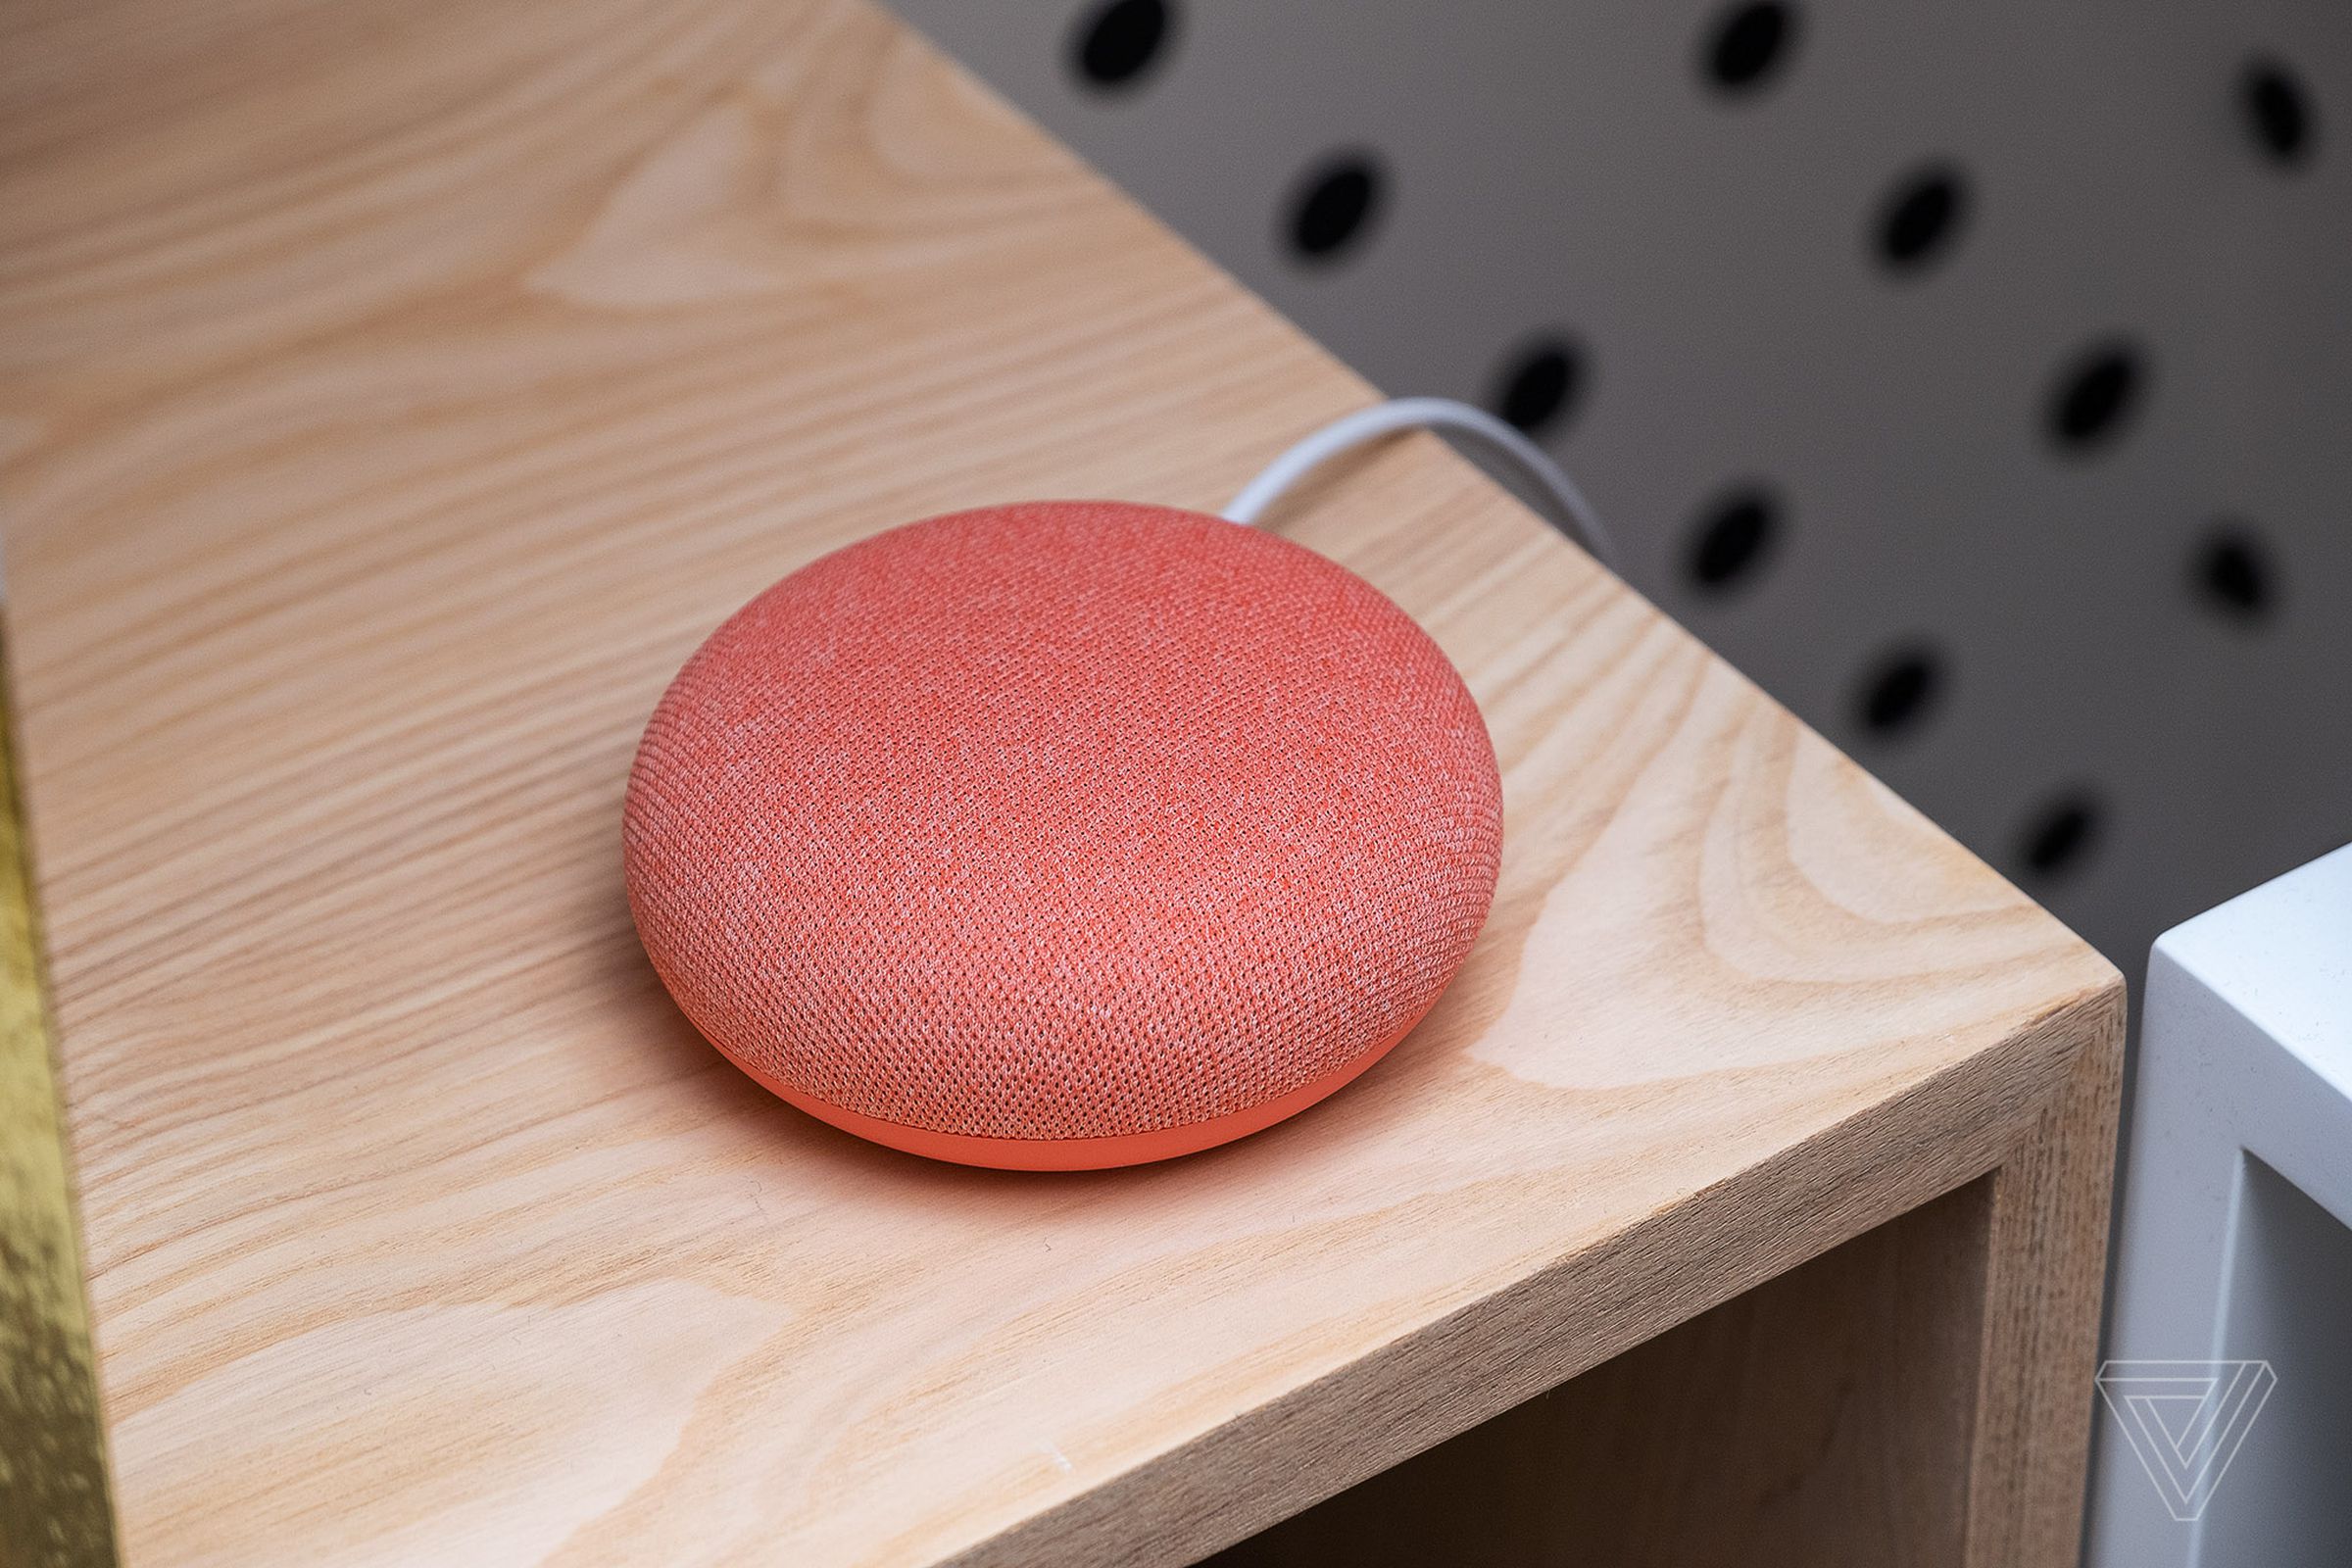 A coral colored Google Nest Mini smart speaker sitting on a wood desk.